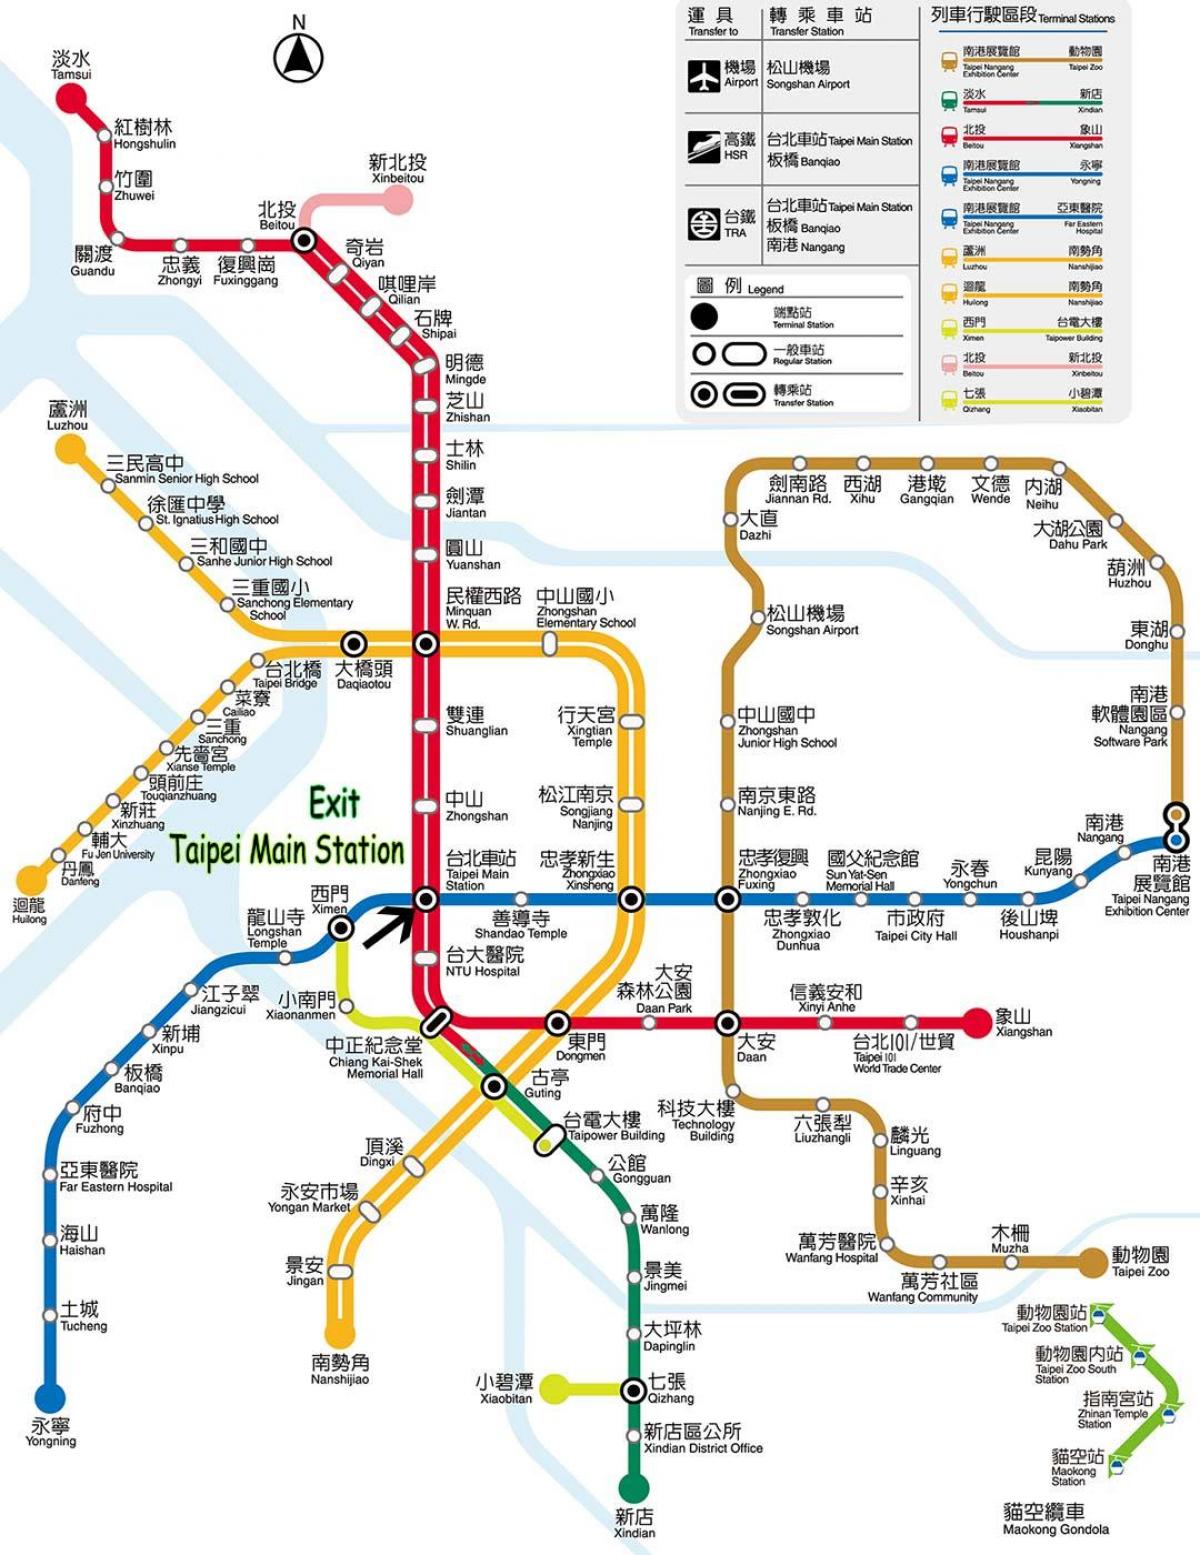 kort over Taipei bus station